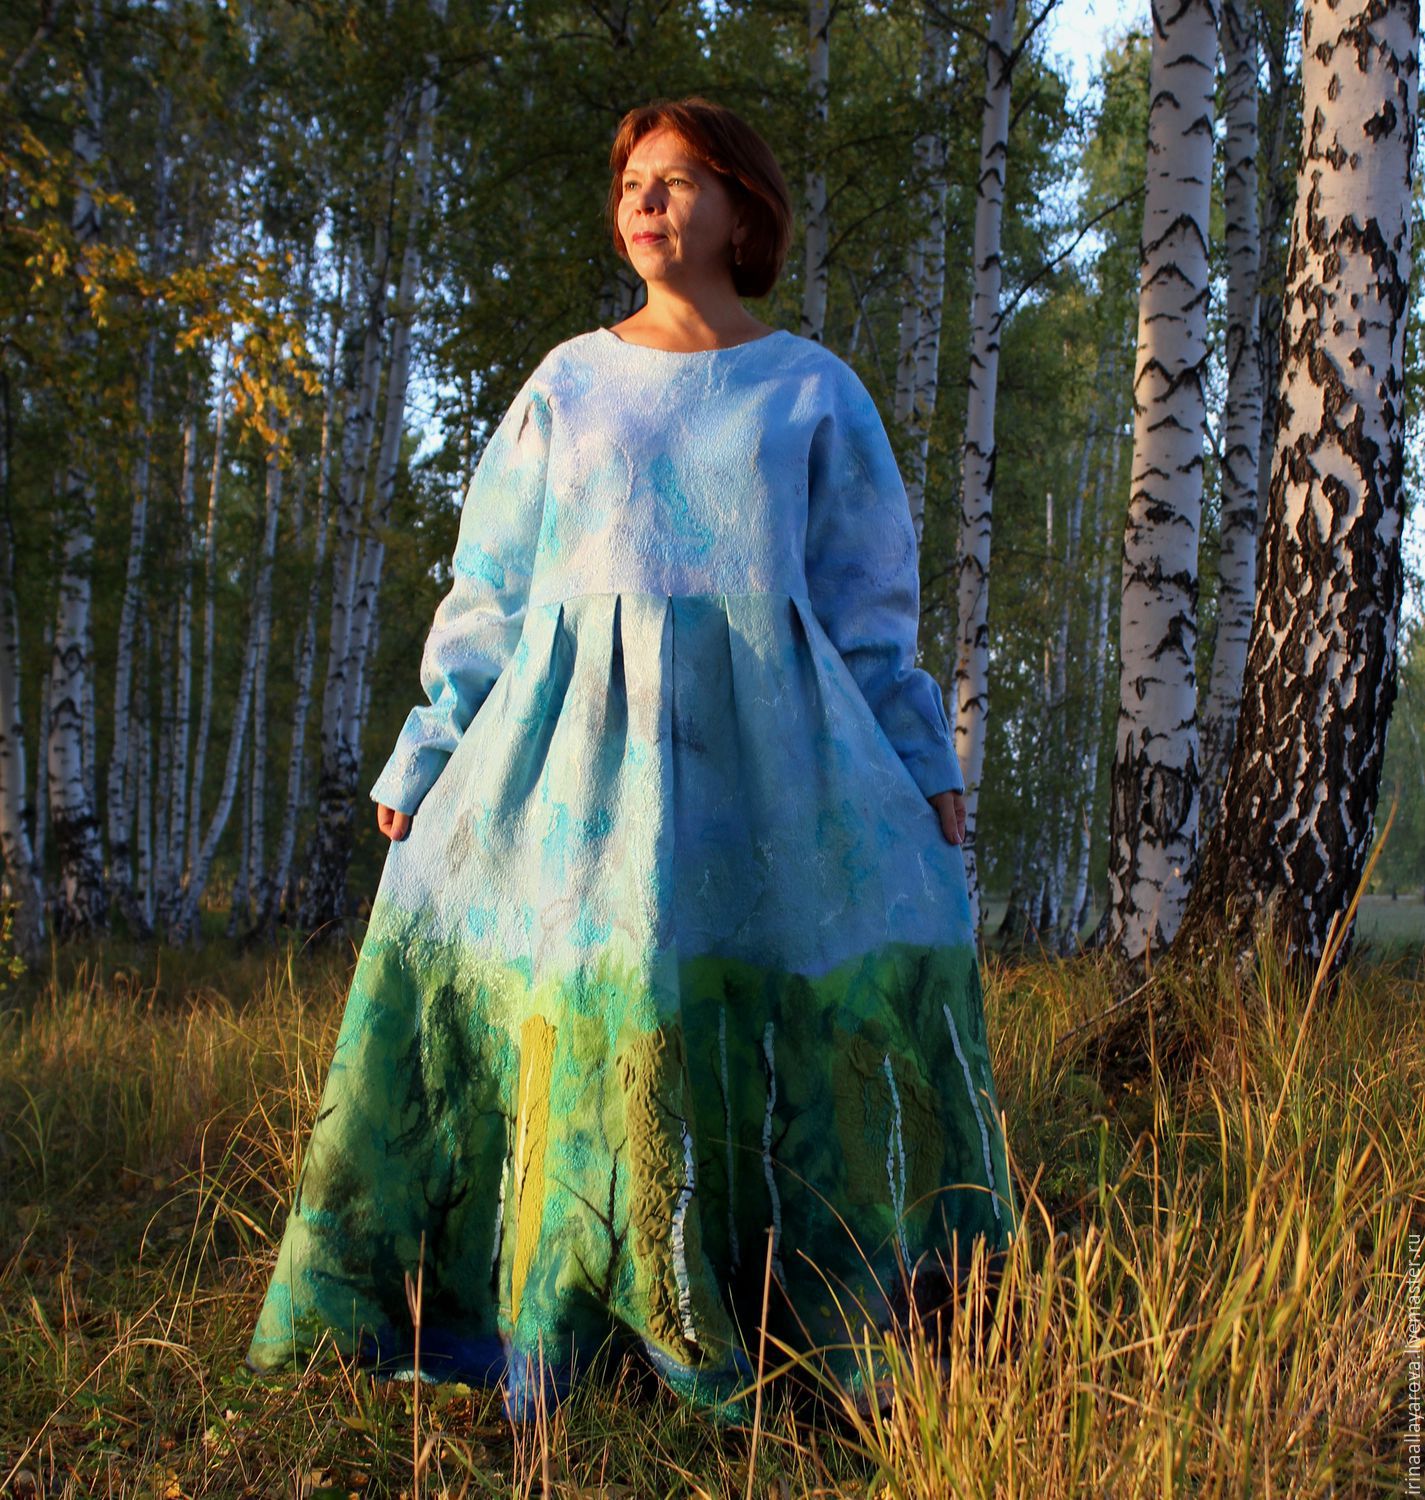 Felted dress 'Native birch', Dresses, Verhneuralsk,  Фото №1